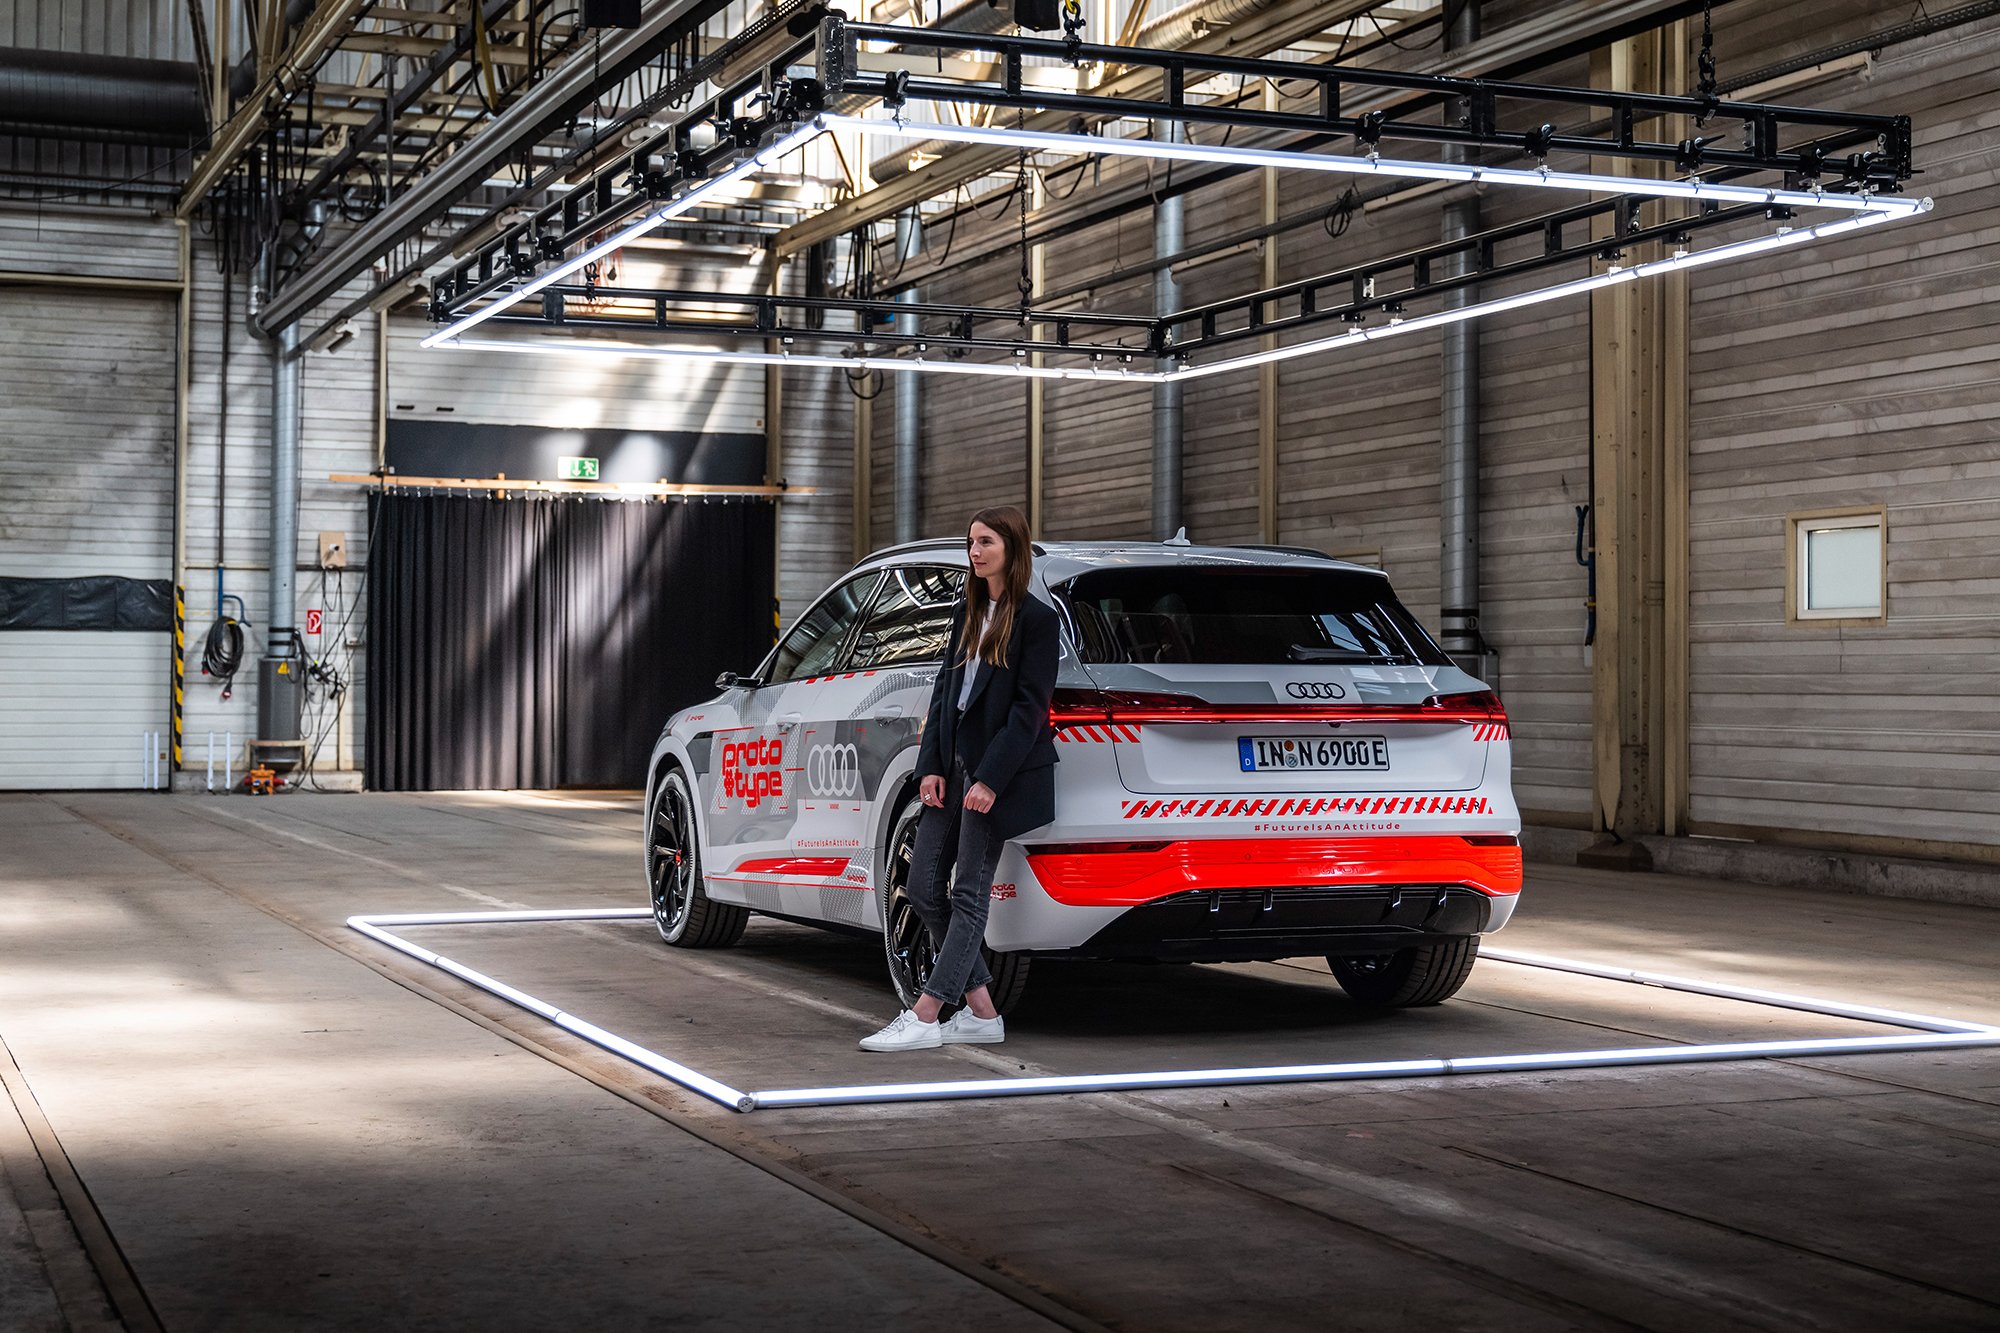 Britta Reineke explores the exterior design new Audi e-tron prototype